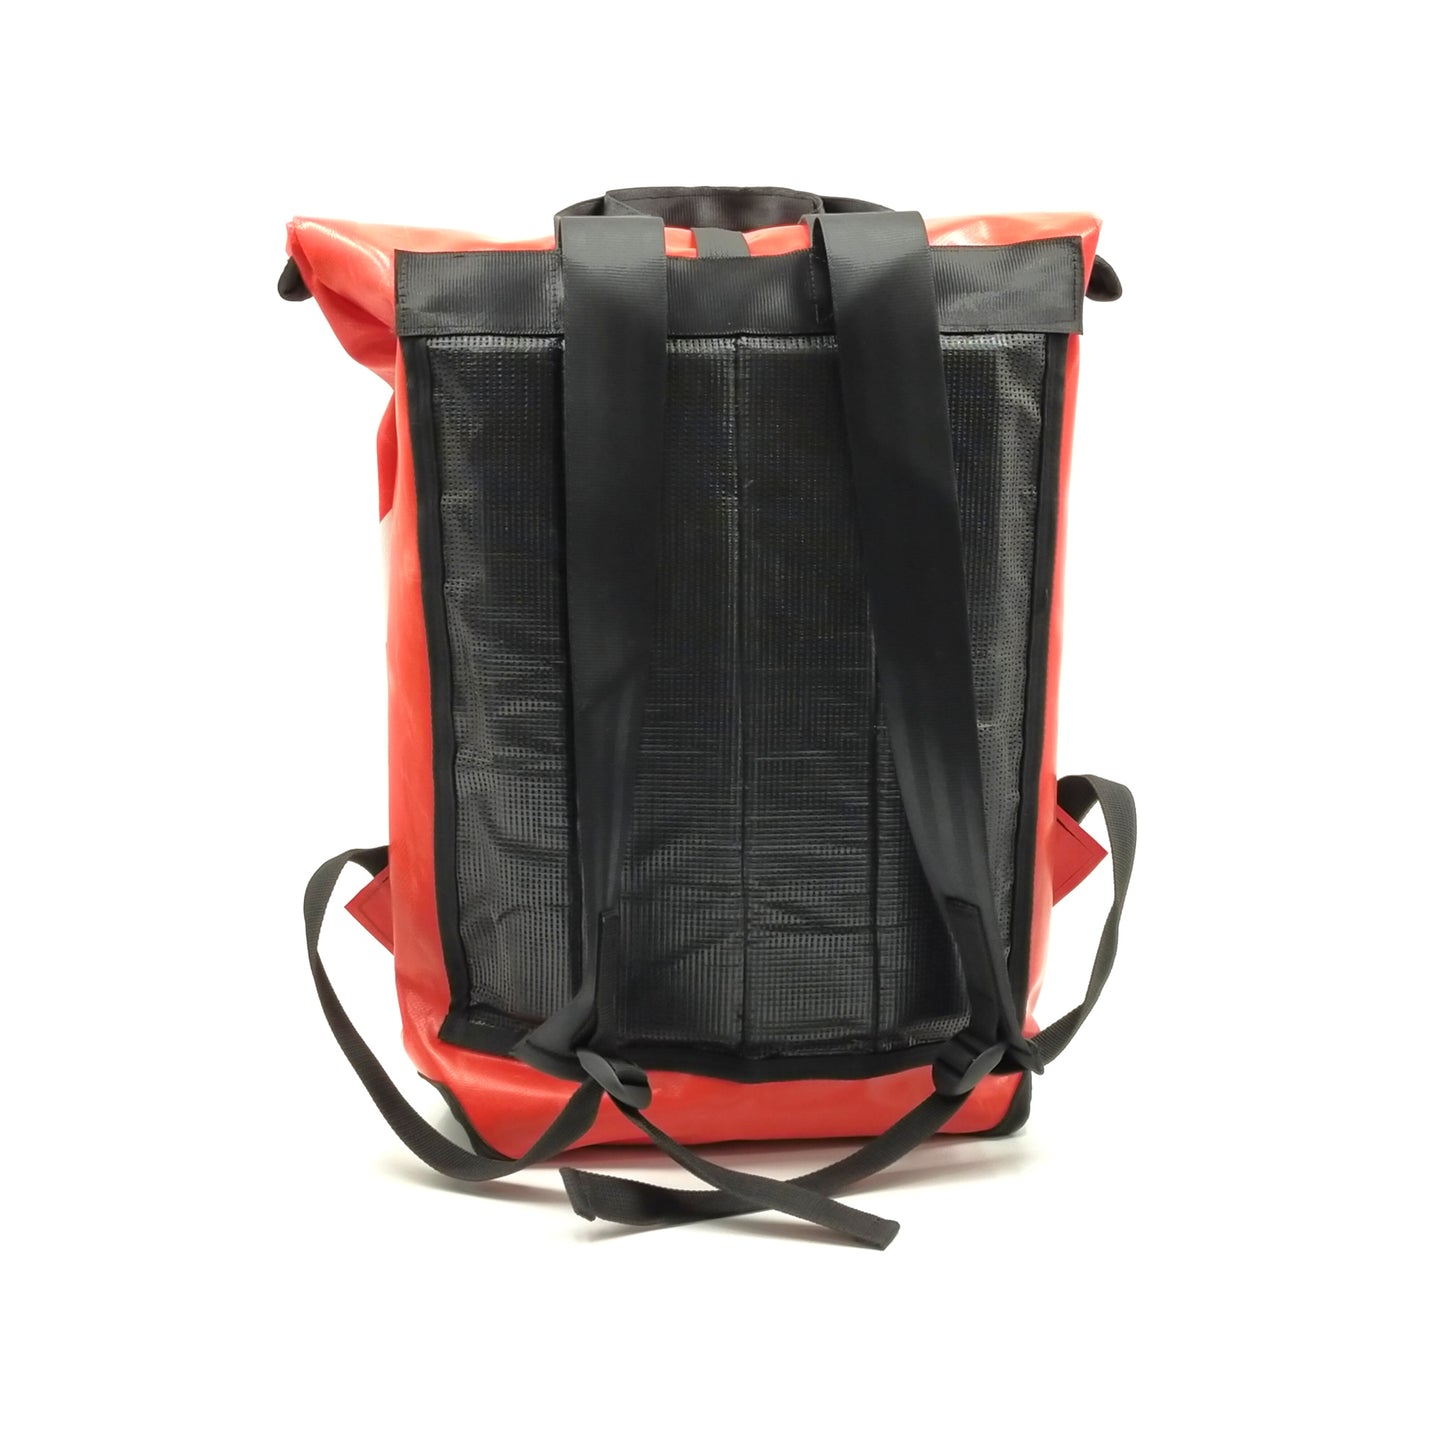 Burtonwood Backpack – Red/White – BW031216